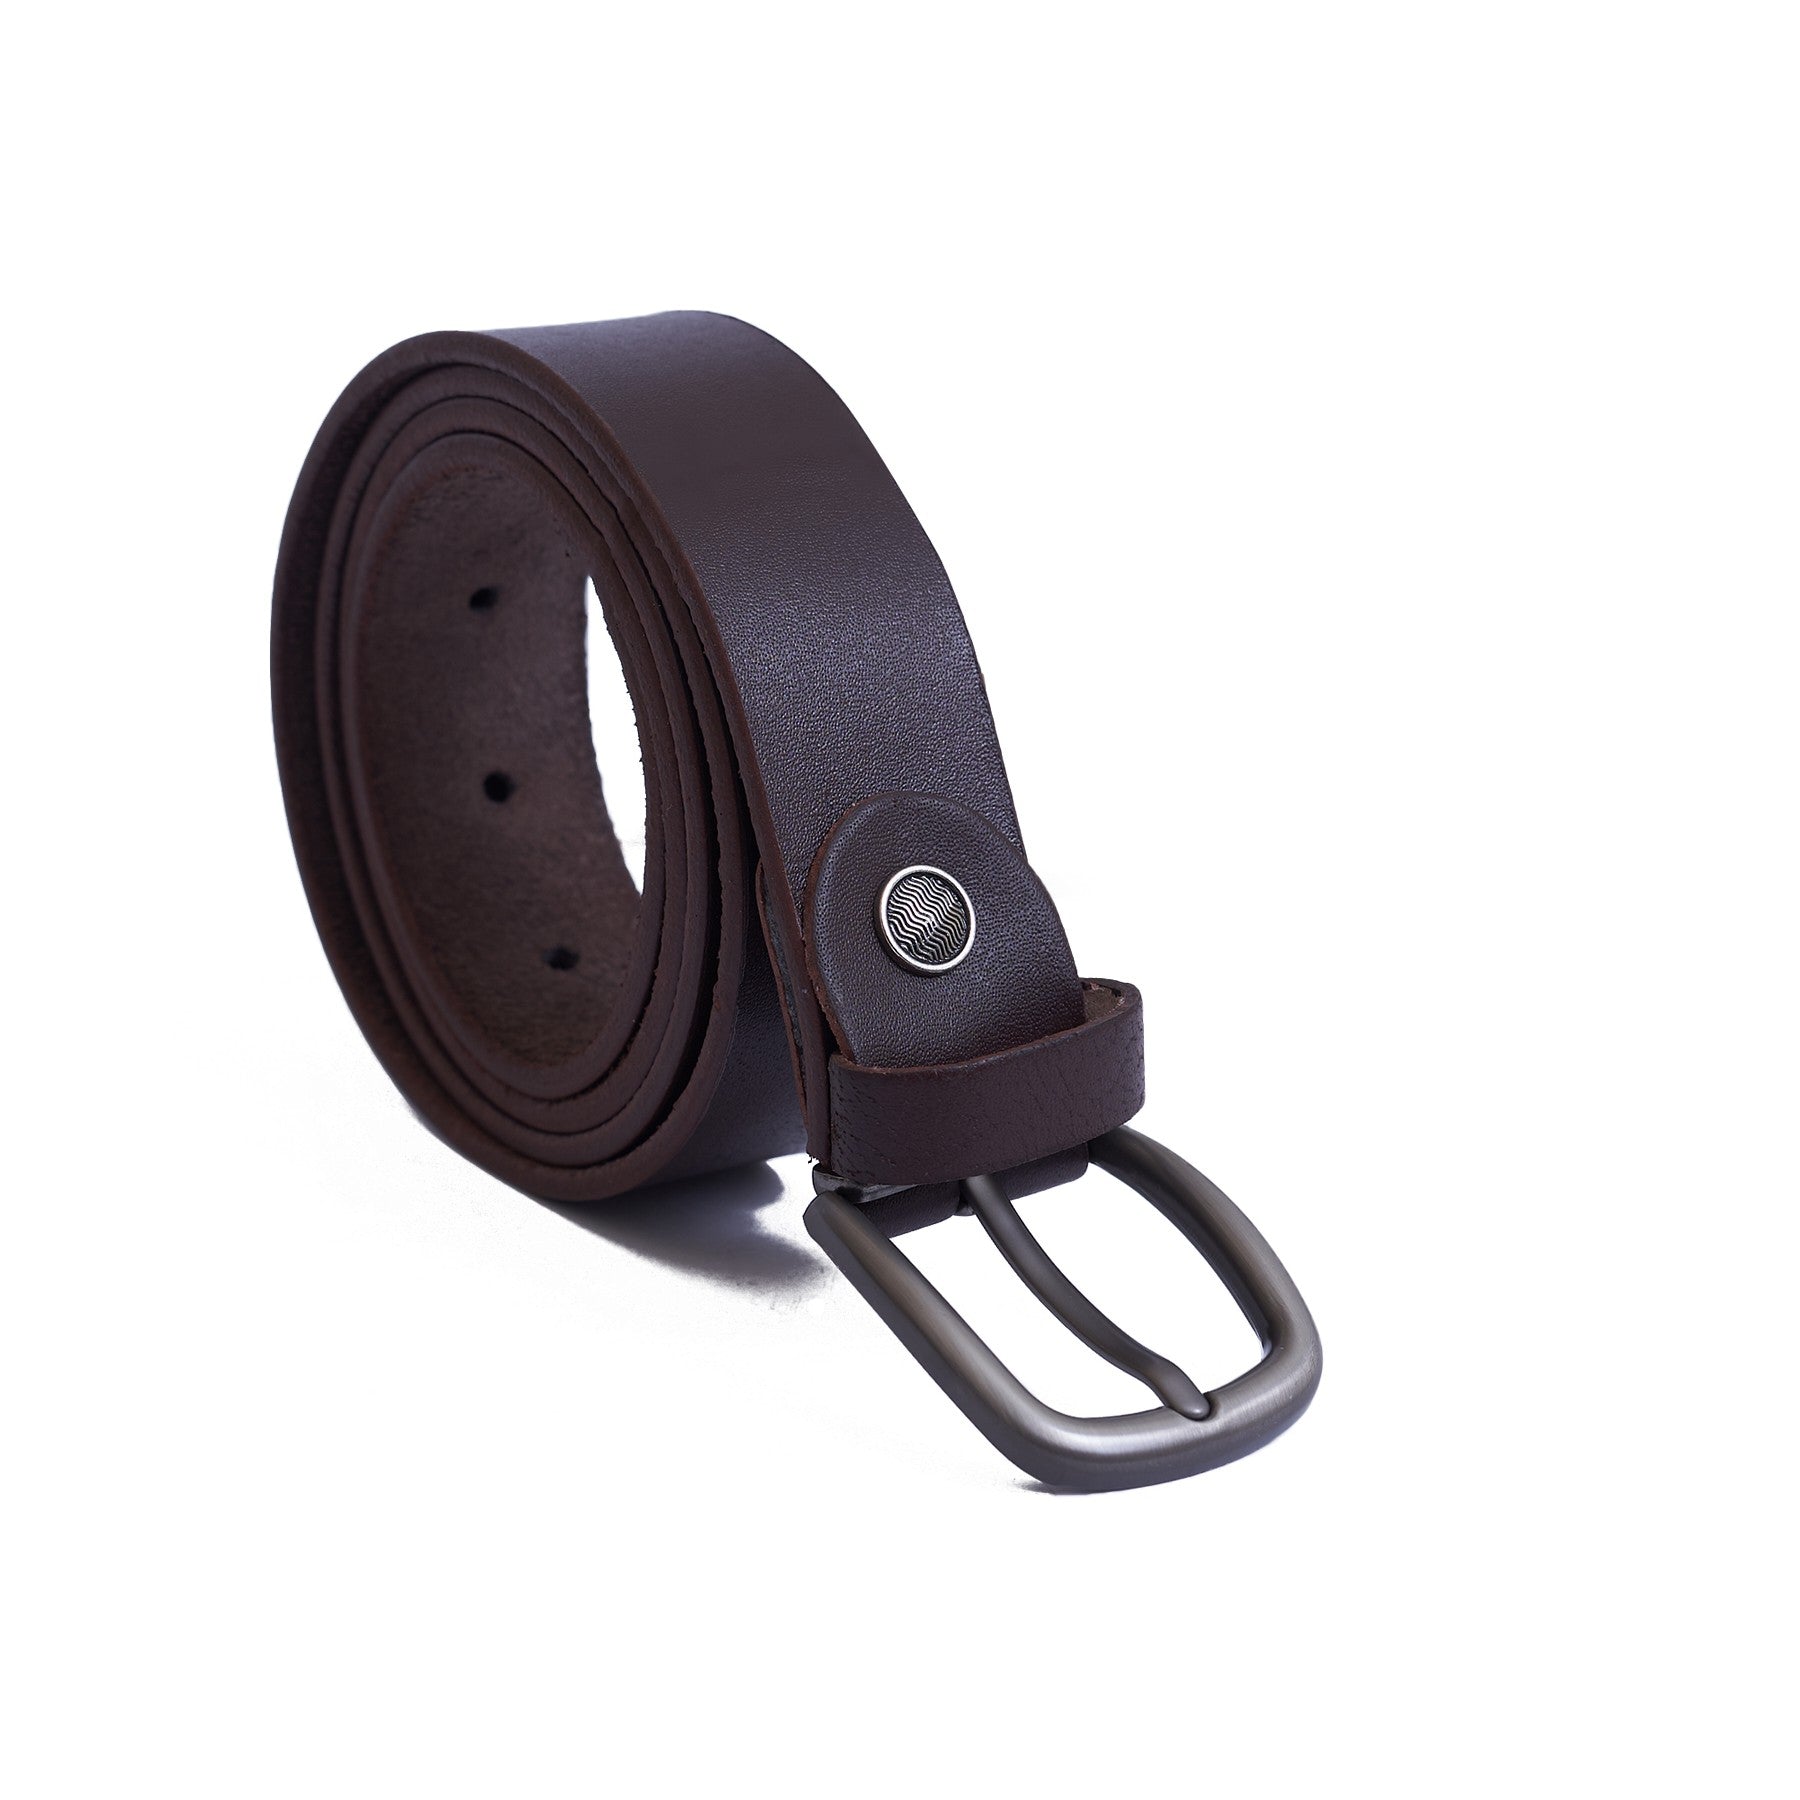 3 CM Genuine leather Belt - lux - Brown Color Model B5101